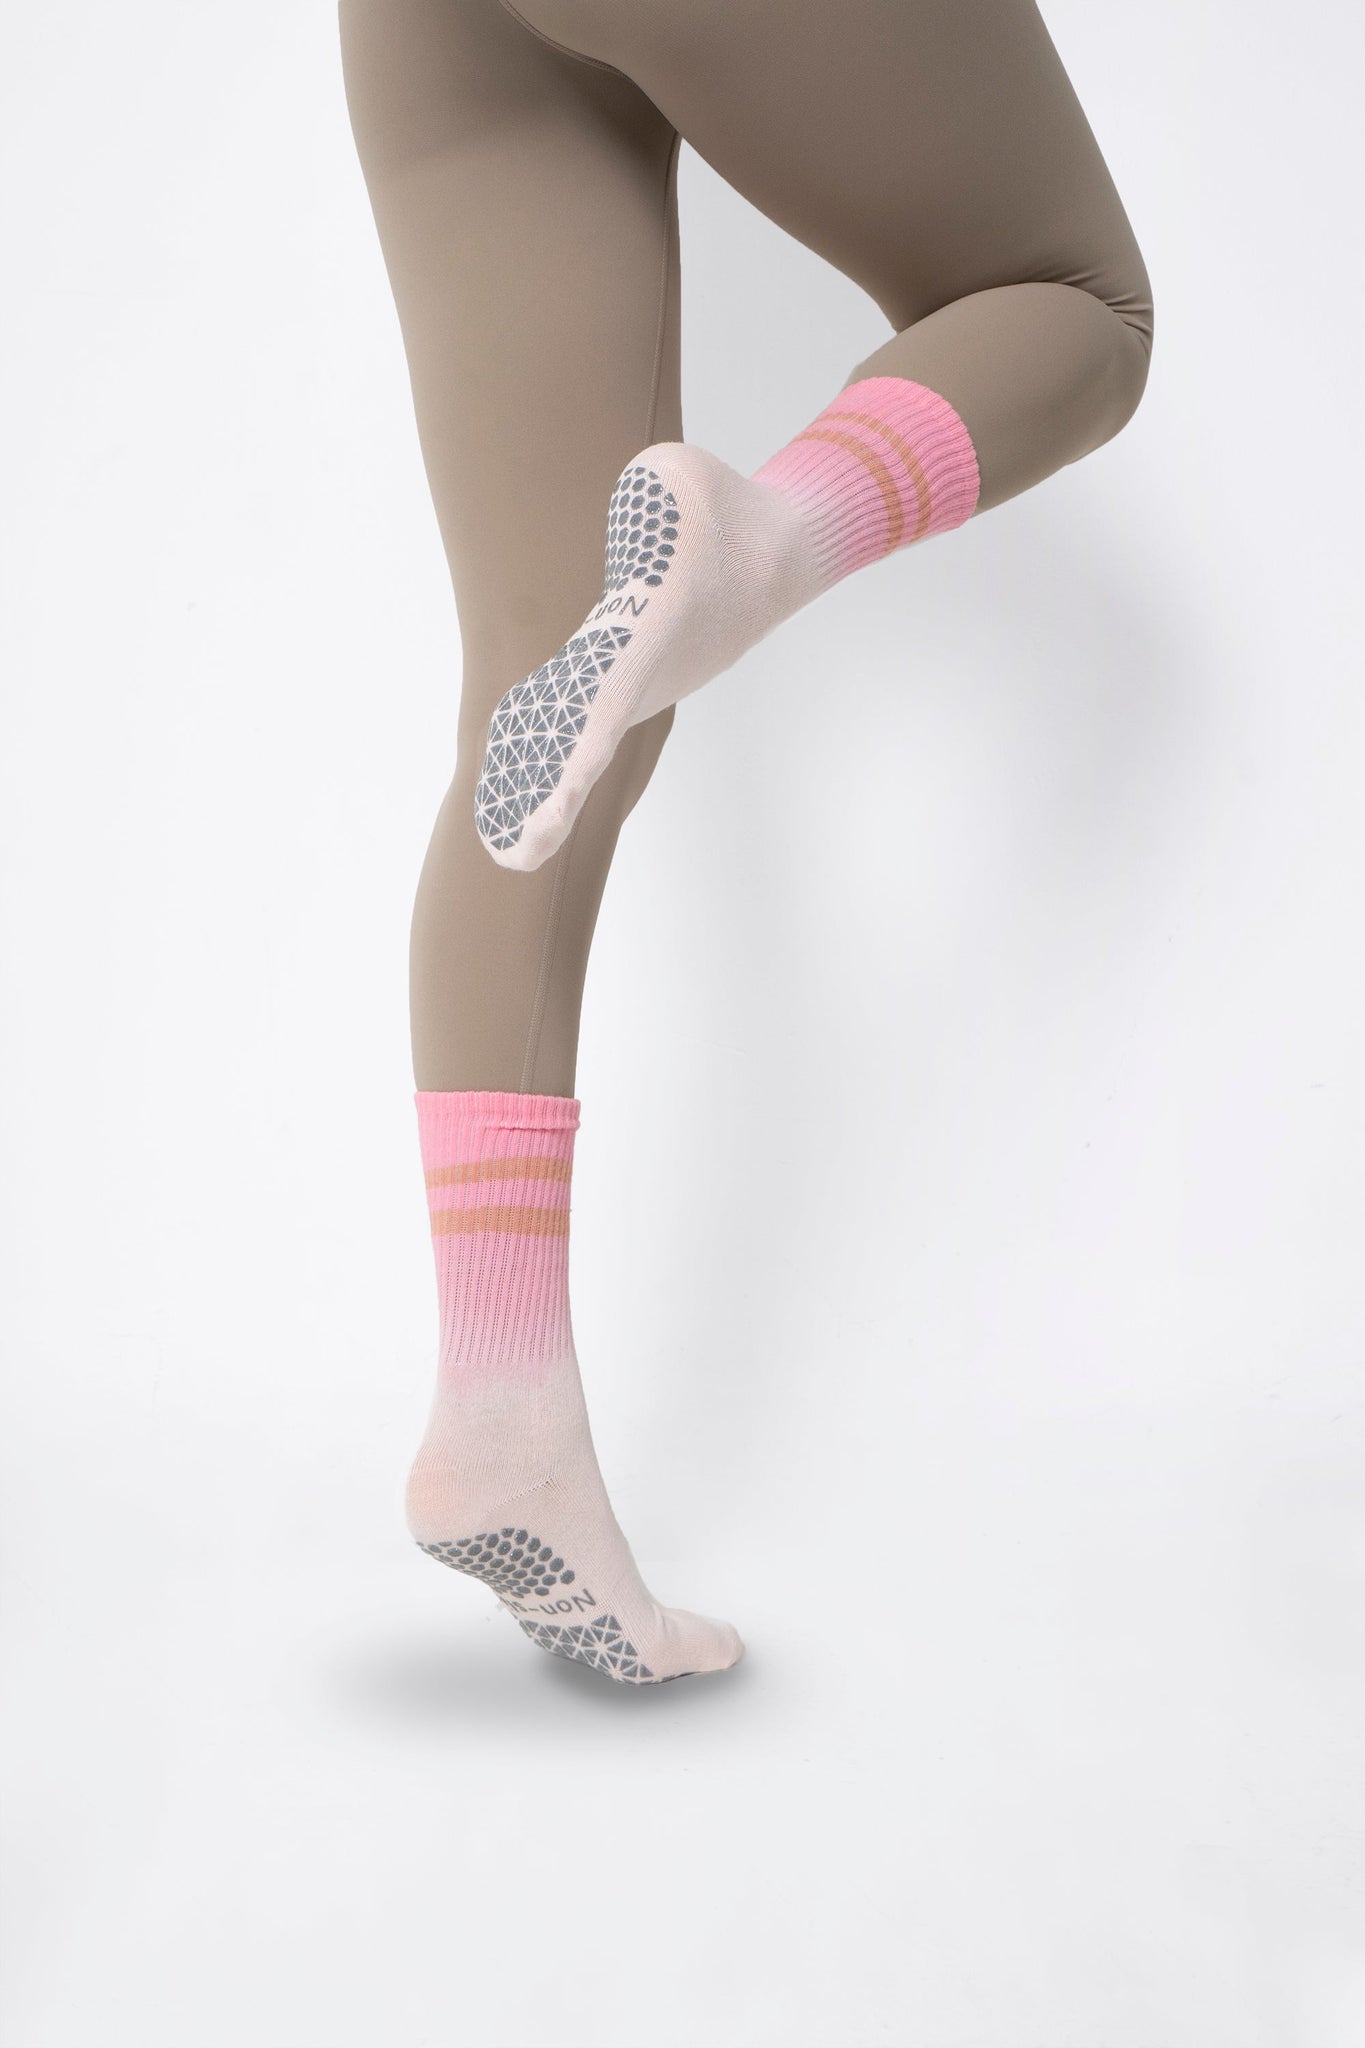 Stay Balanced Lined Non Slip Grip Socks (2-Pairs)